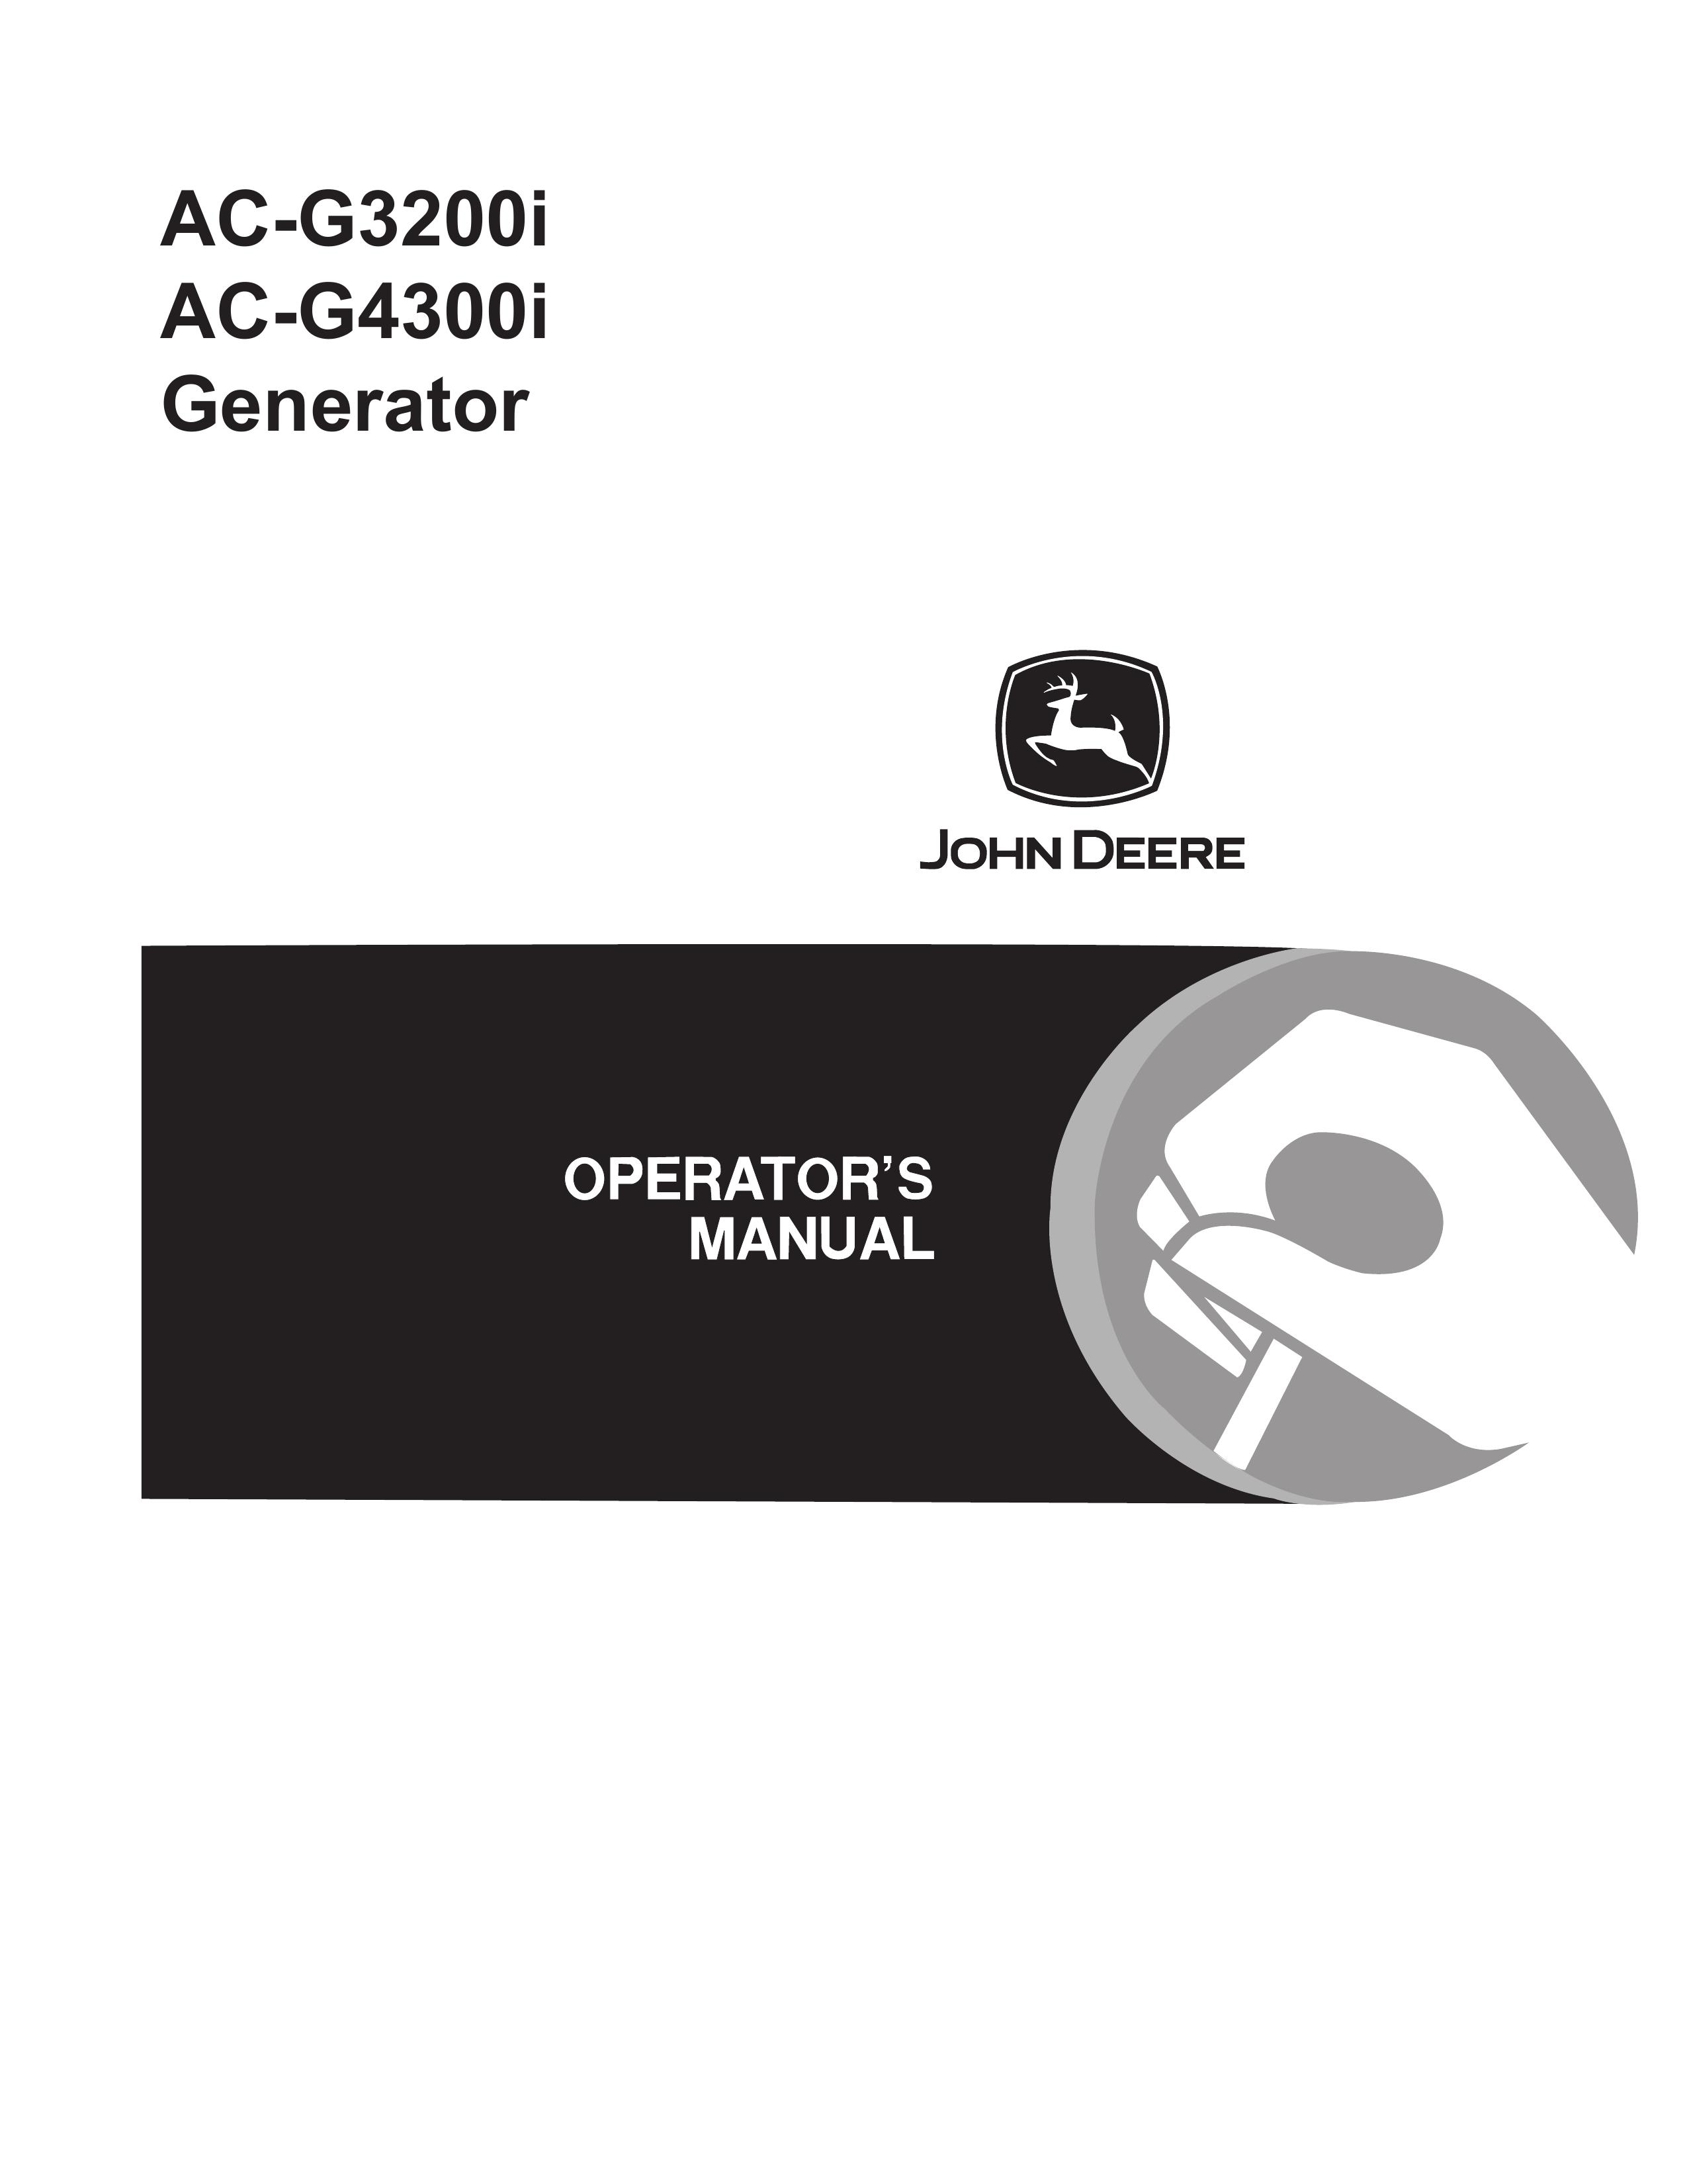 John Deere AC-G3200i Portable Generator User Manual